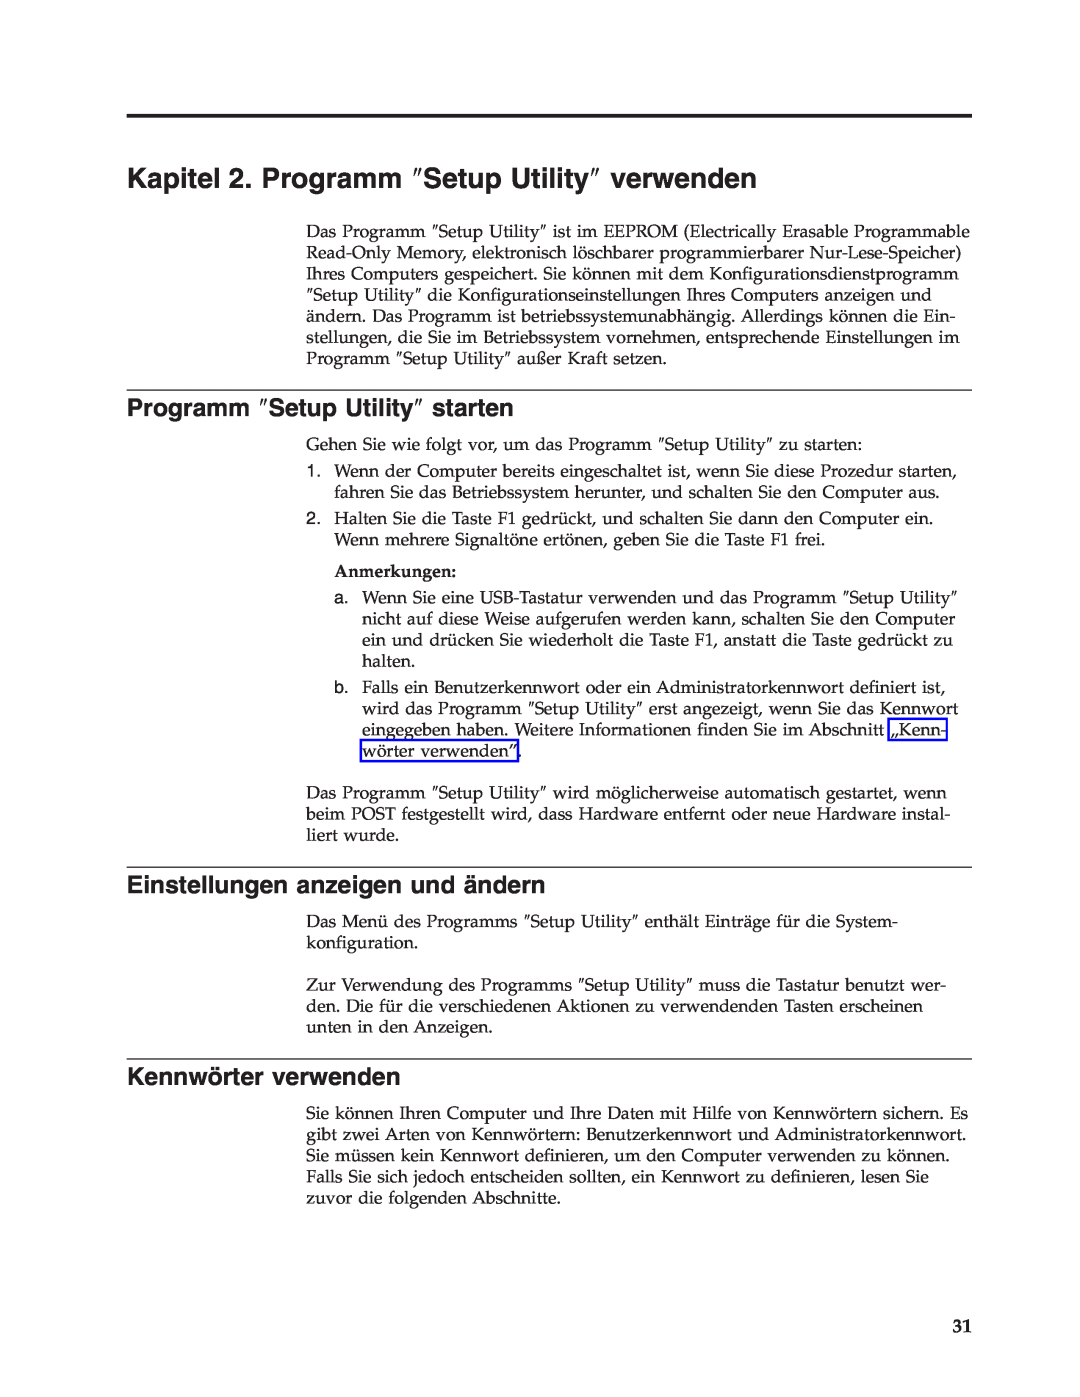 IBM 9213, 9212 manual Kapitel 2. Programm ″Setup Utility″ verwenden, Programm ″Setup Utility″ starten, Kennwörter verwenden 